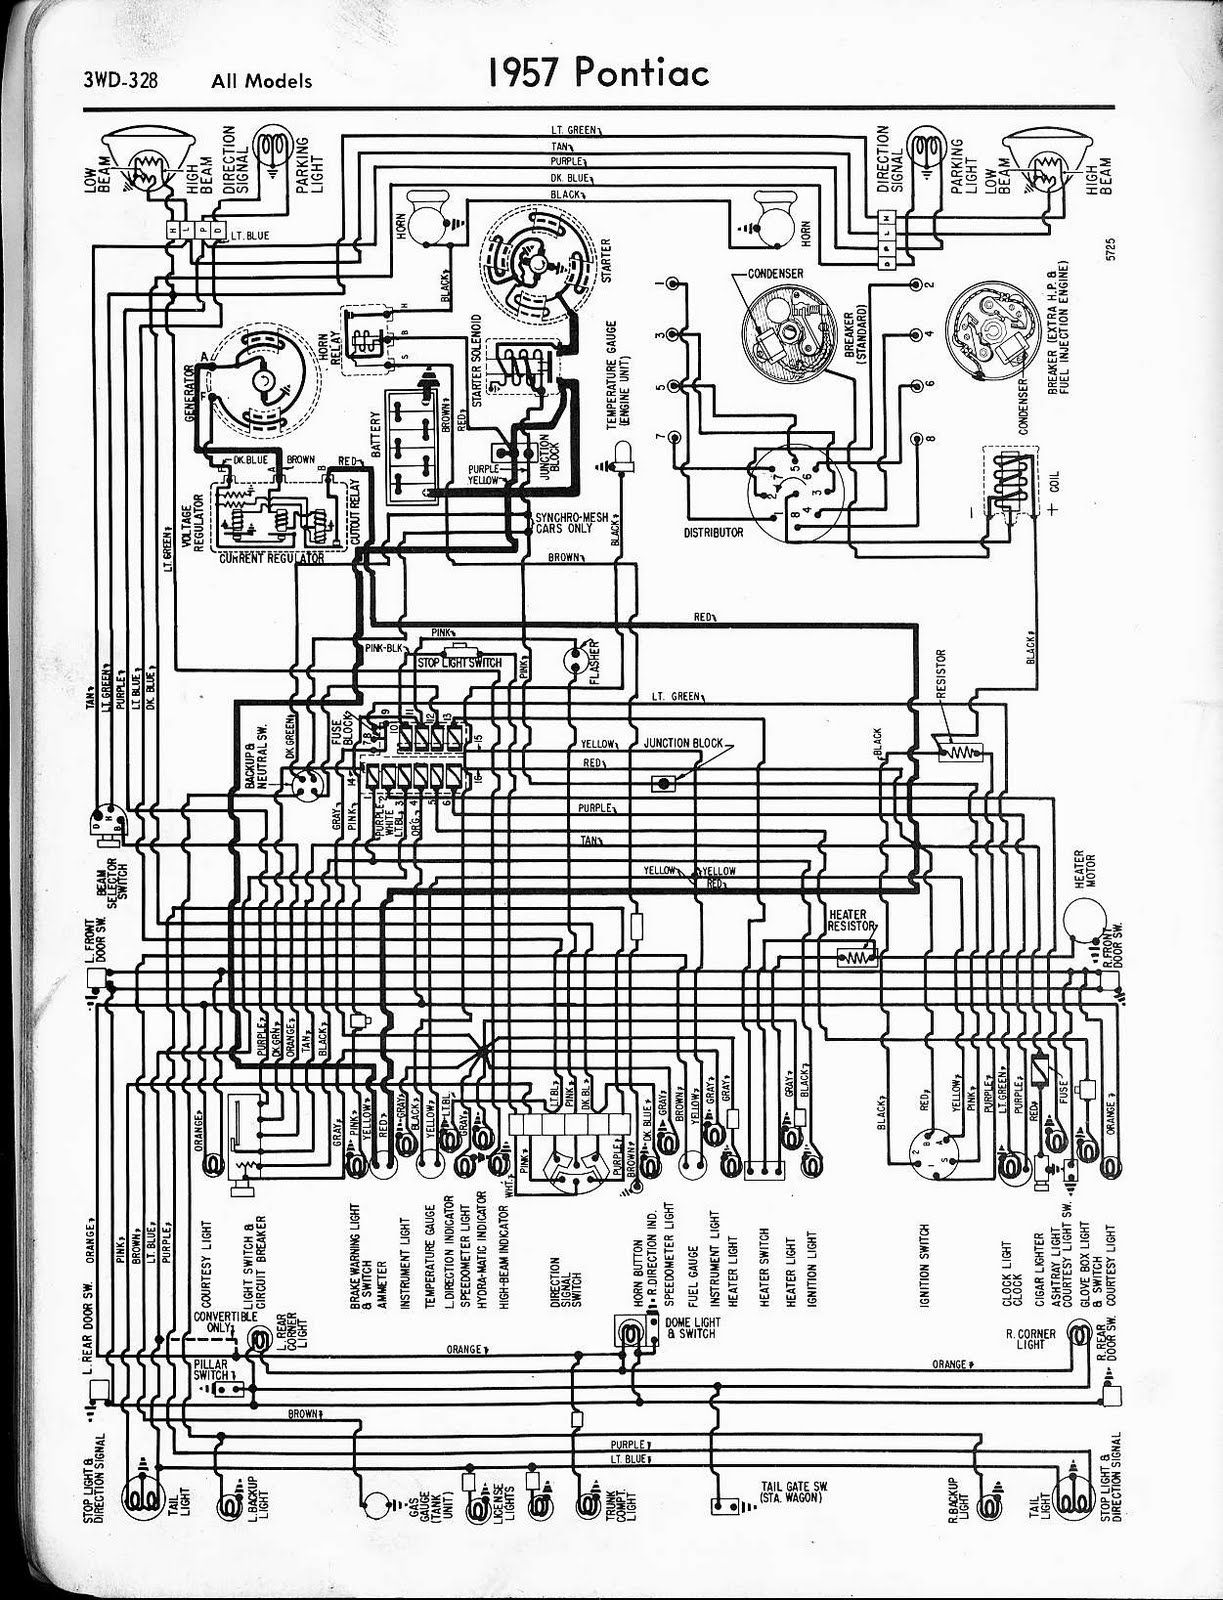 Free Auto Wiring Diagram: 1957 Pontiac Wiring Diagram